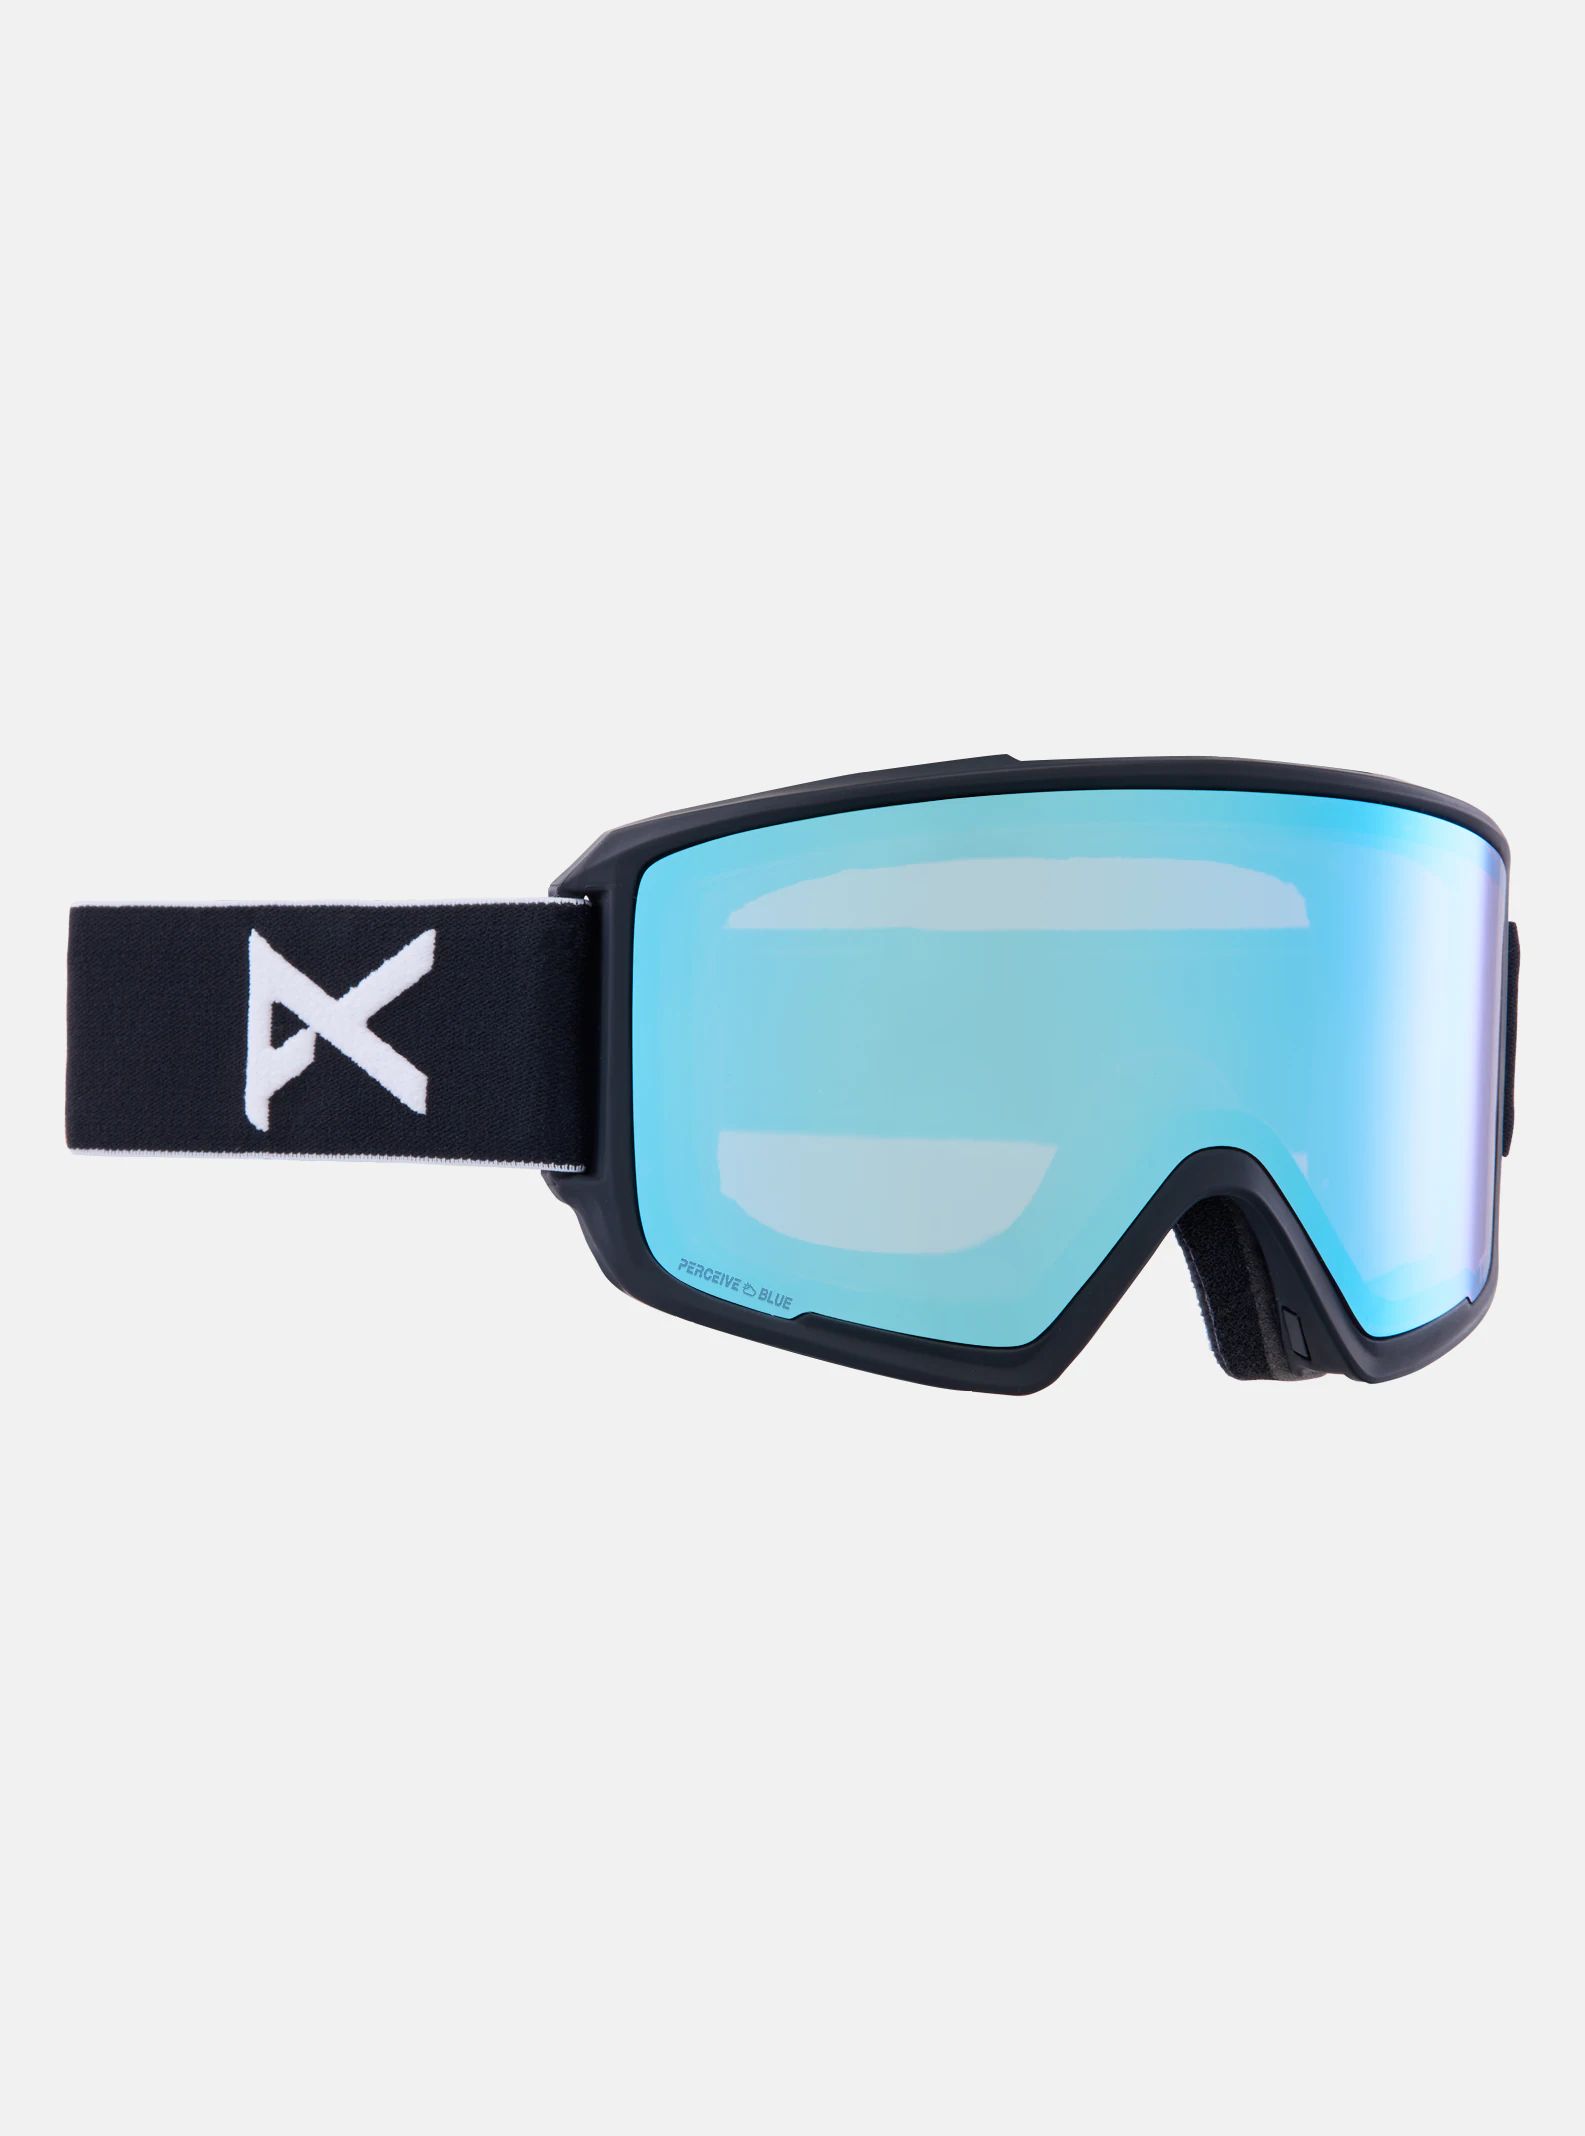 Anon M4 Goggles (Cylindrical) + Bonus Lens + MFI® Face Mask | Burton Snowboards US